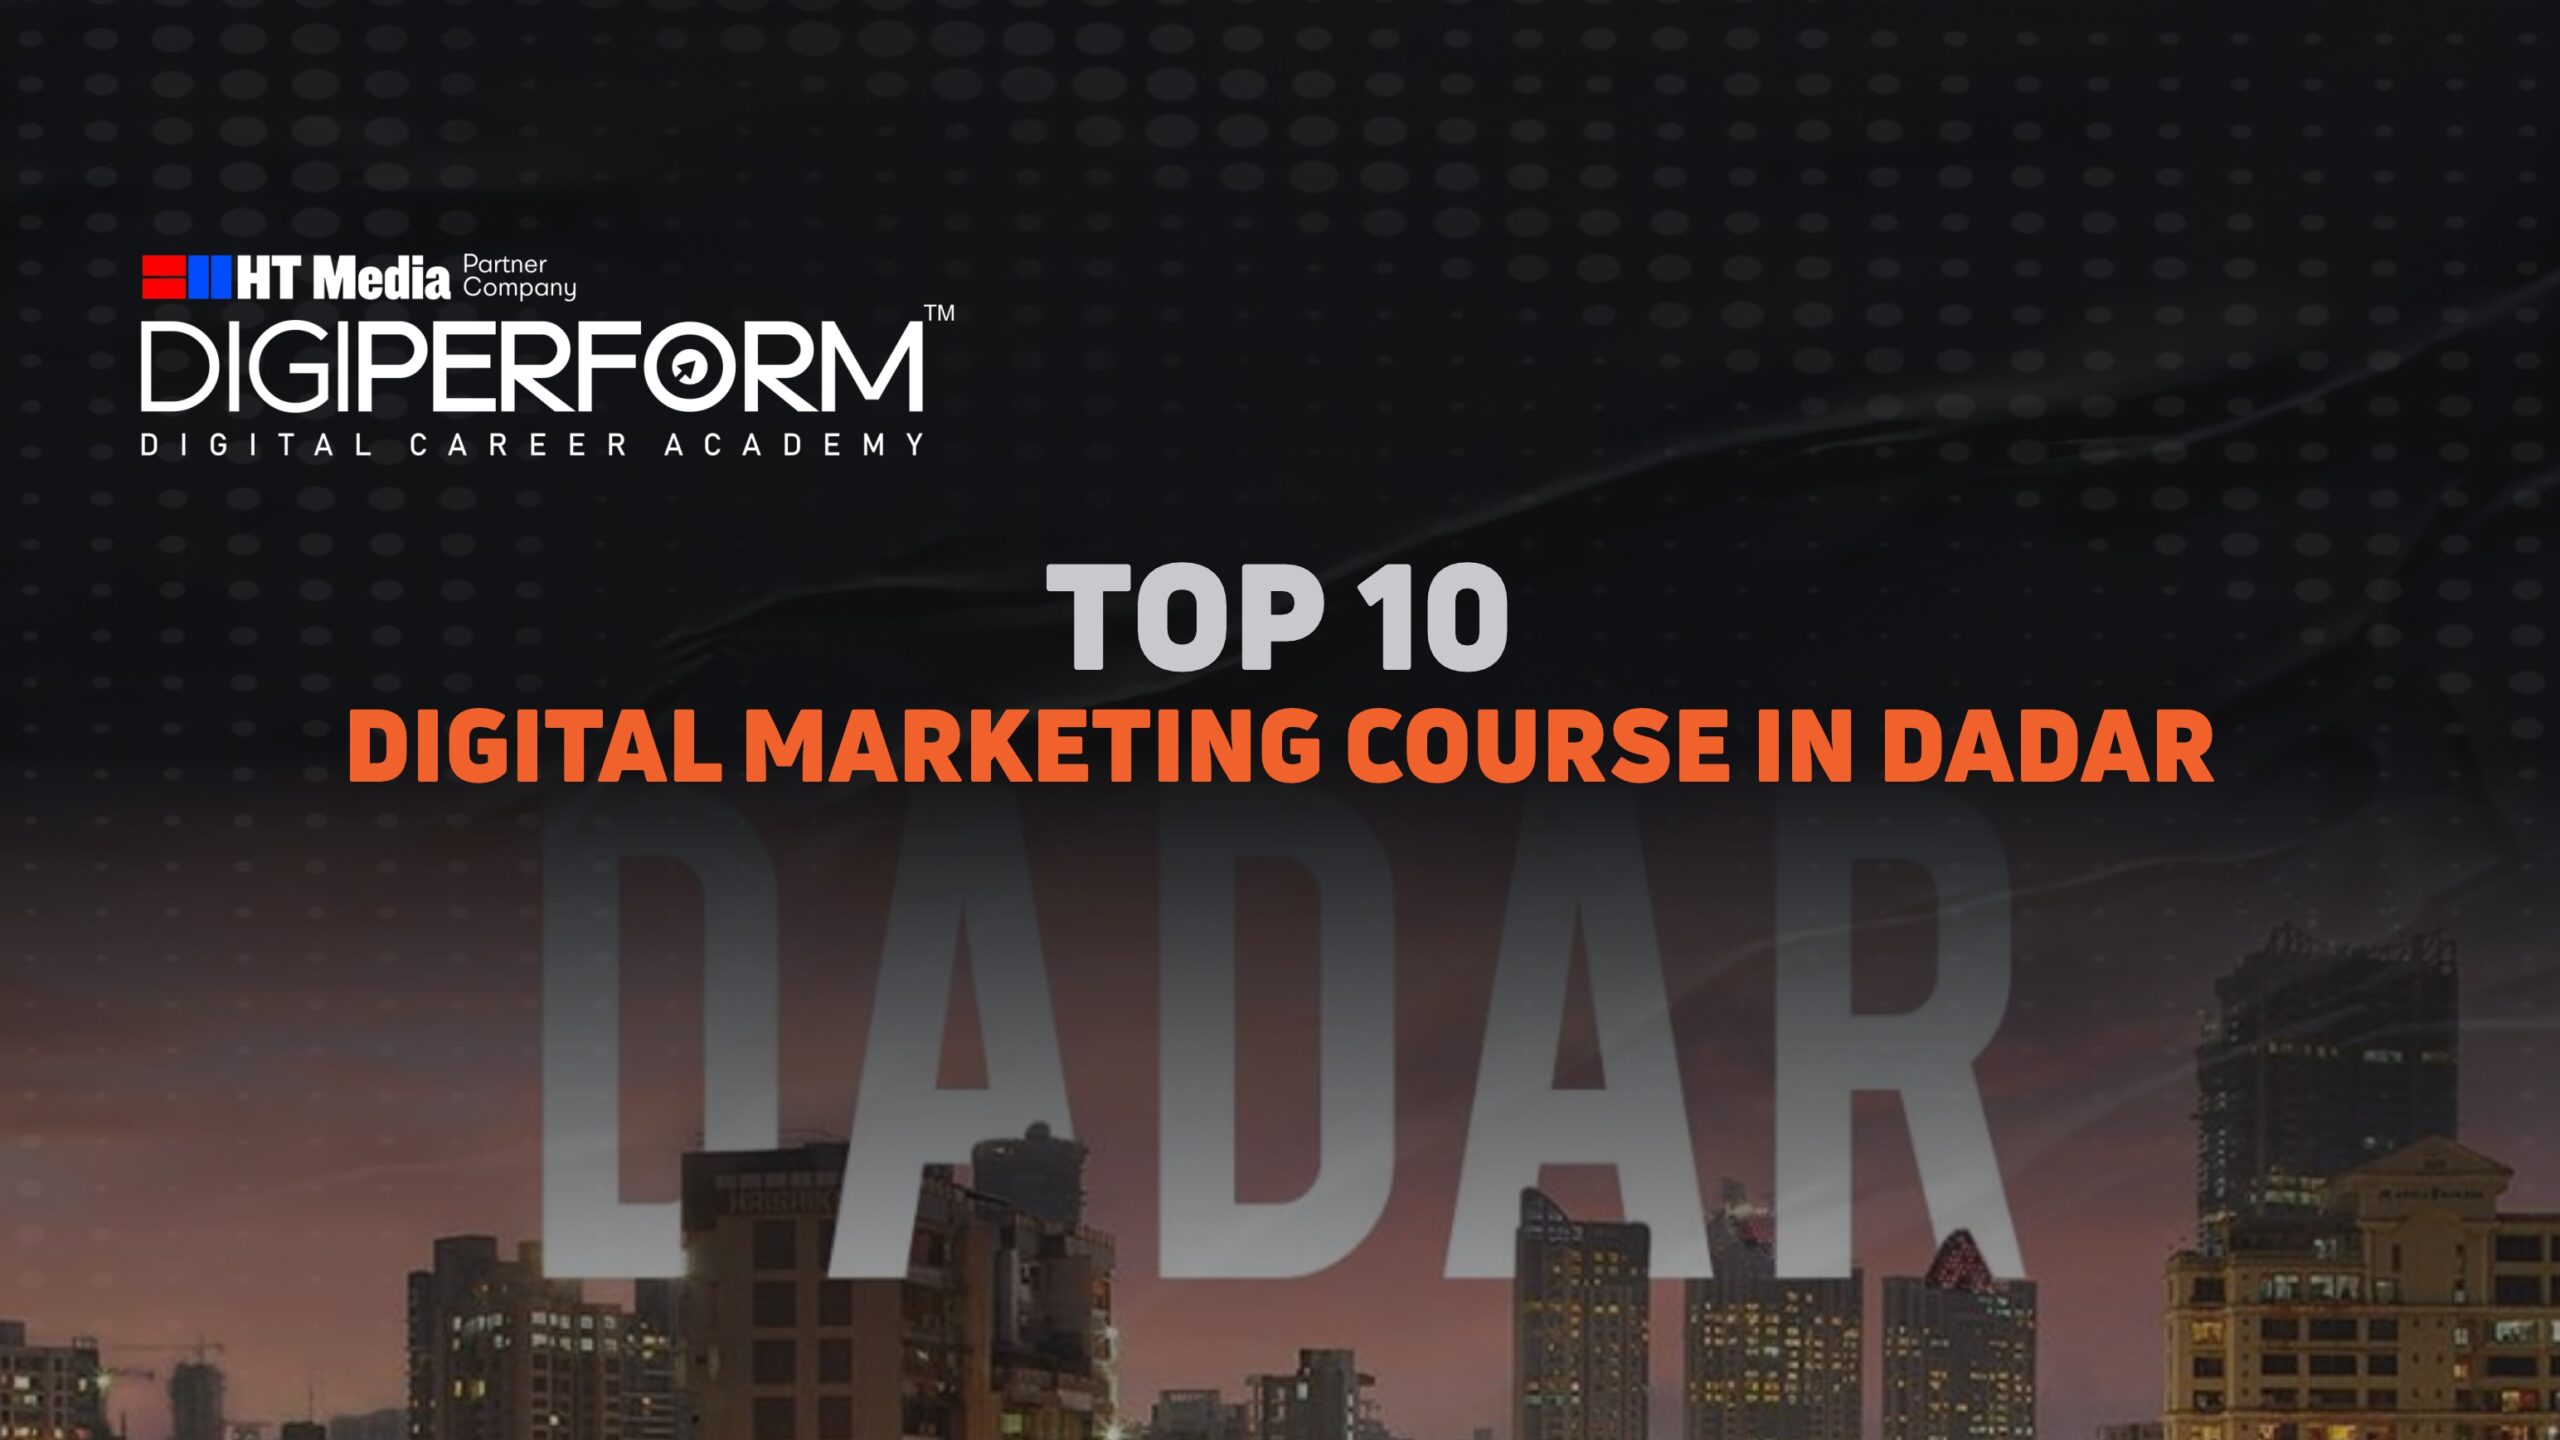 Top 10 Digital Marketing Course in Dadar